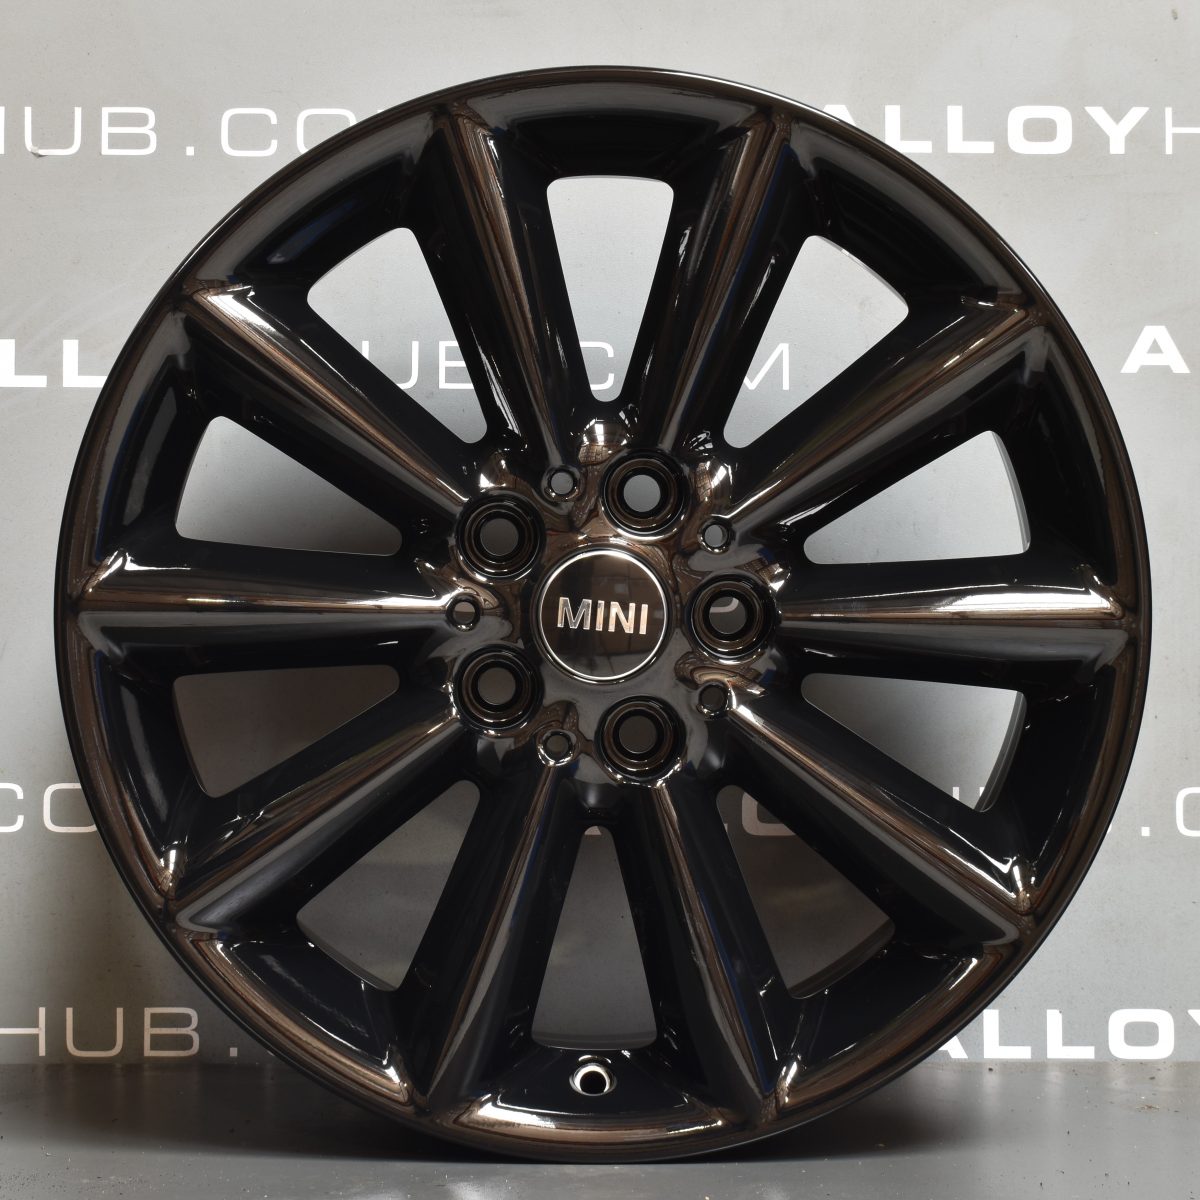 Genuine Mini Clubman Vent Spoke 17" inch Alloy Wheels with Gloss Black Finish 36116856045